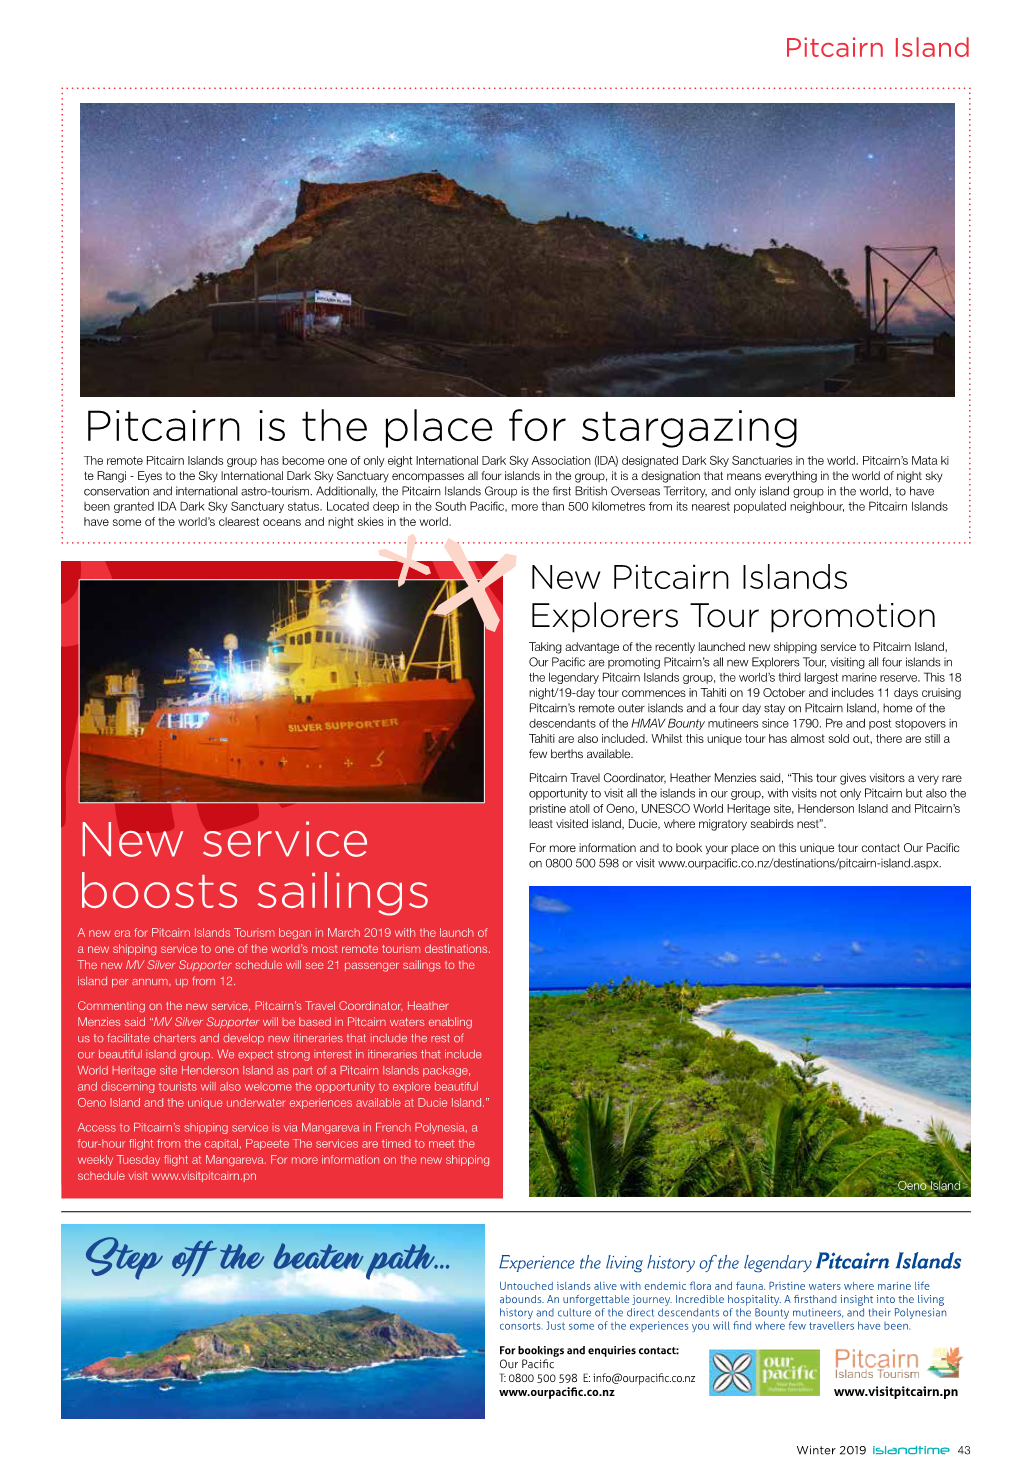 Pitcairn Island Holiday Update